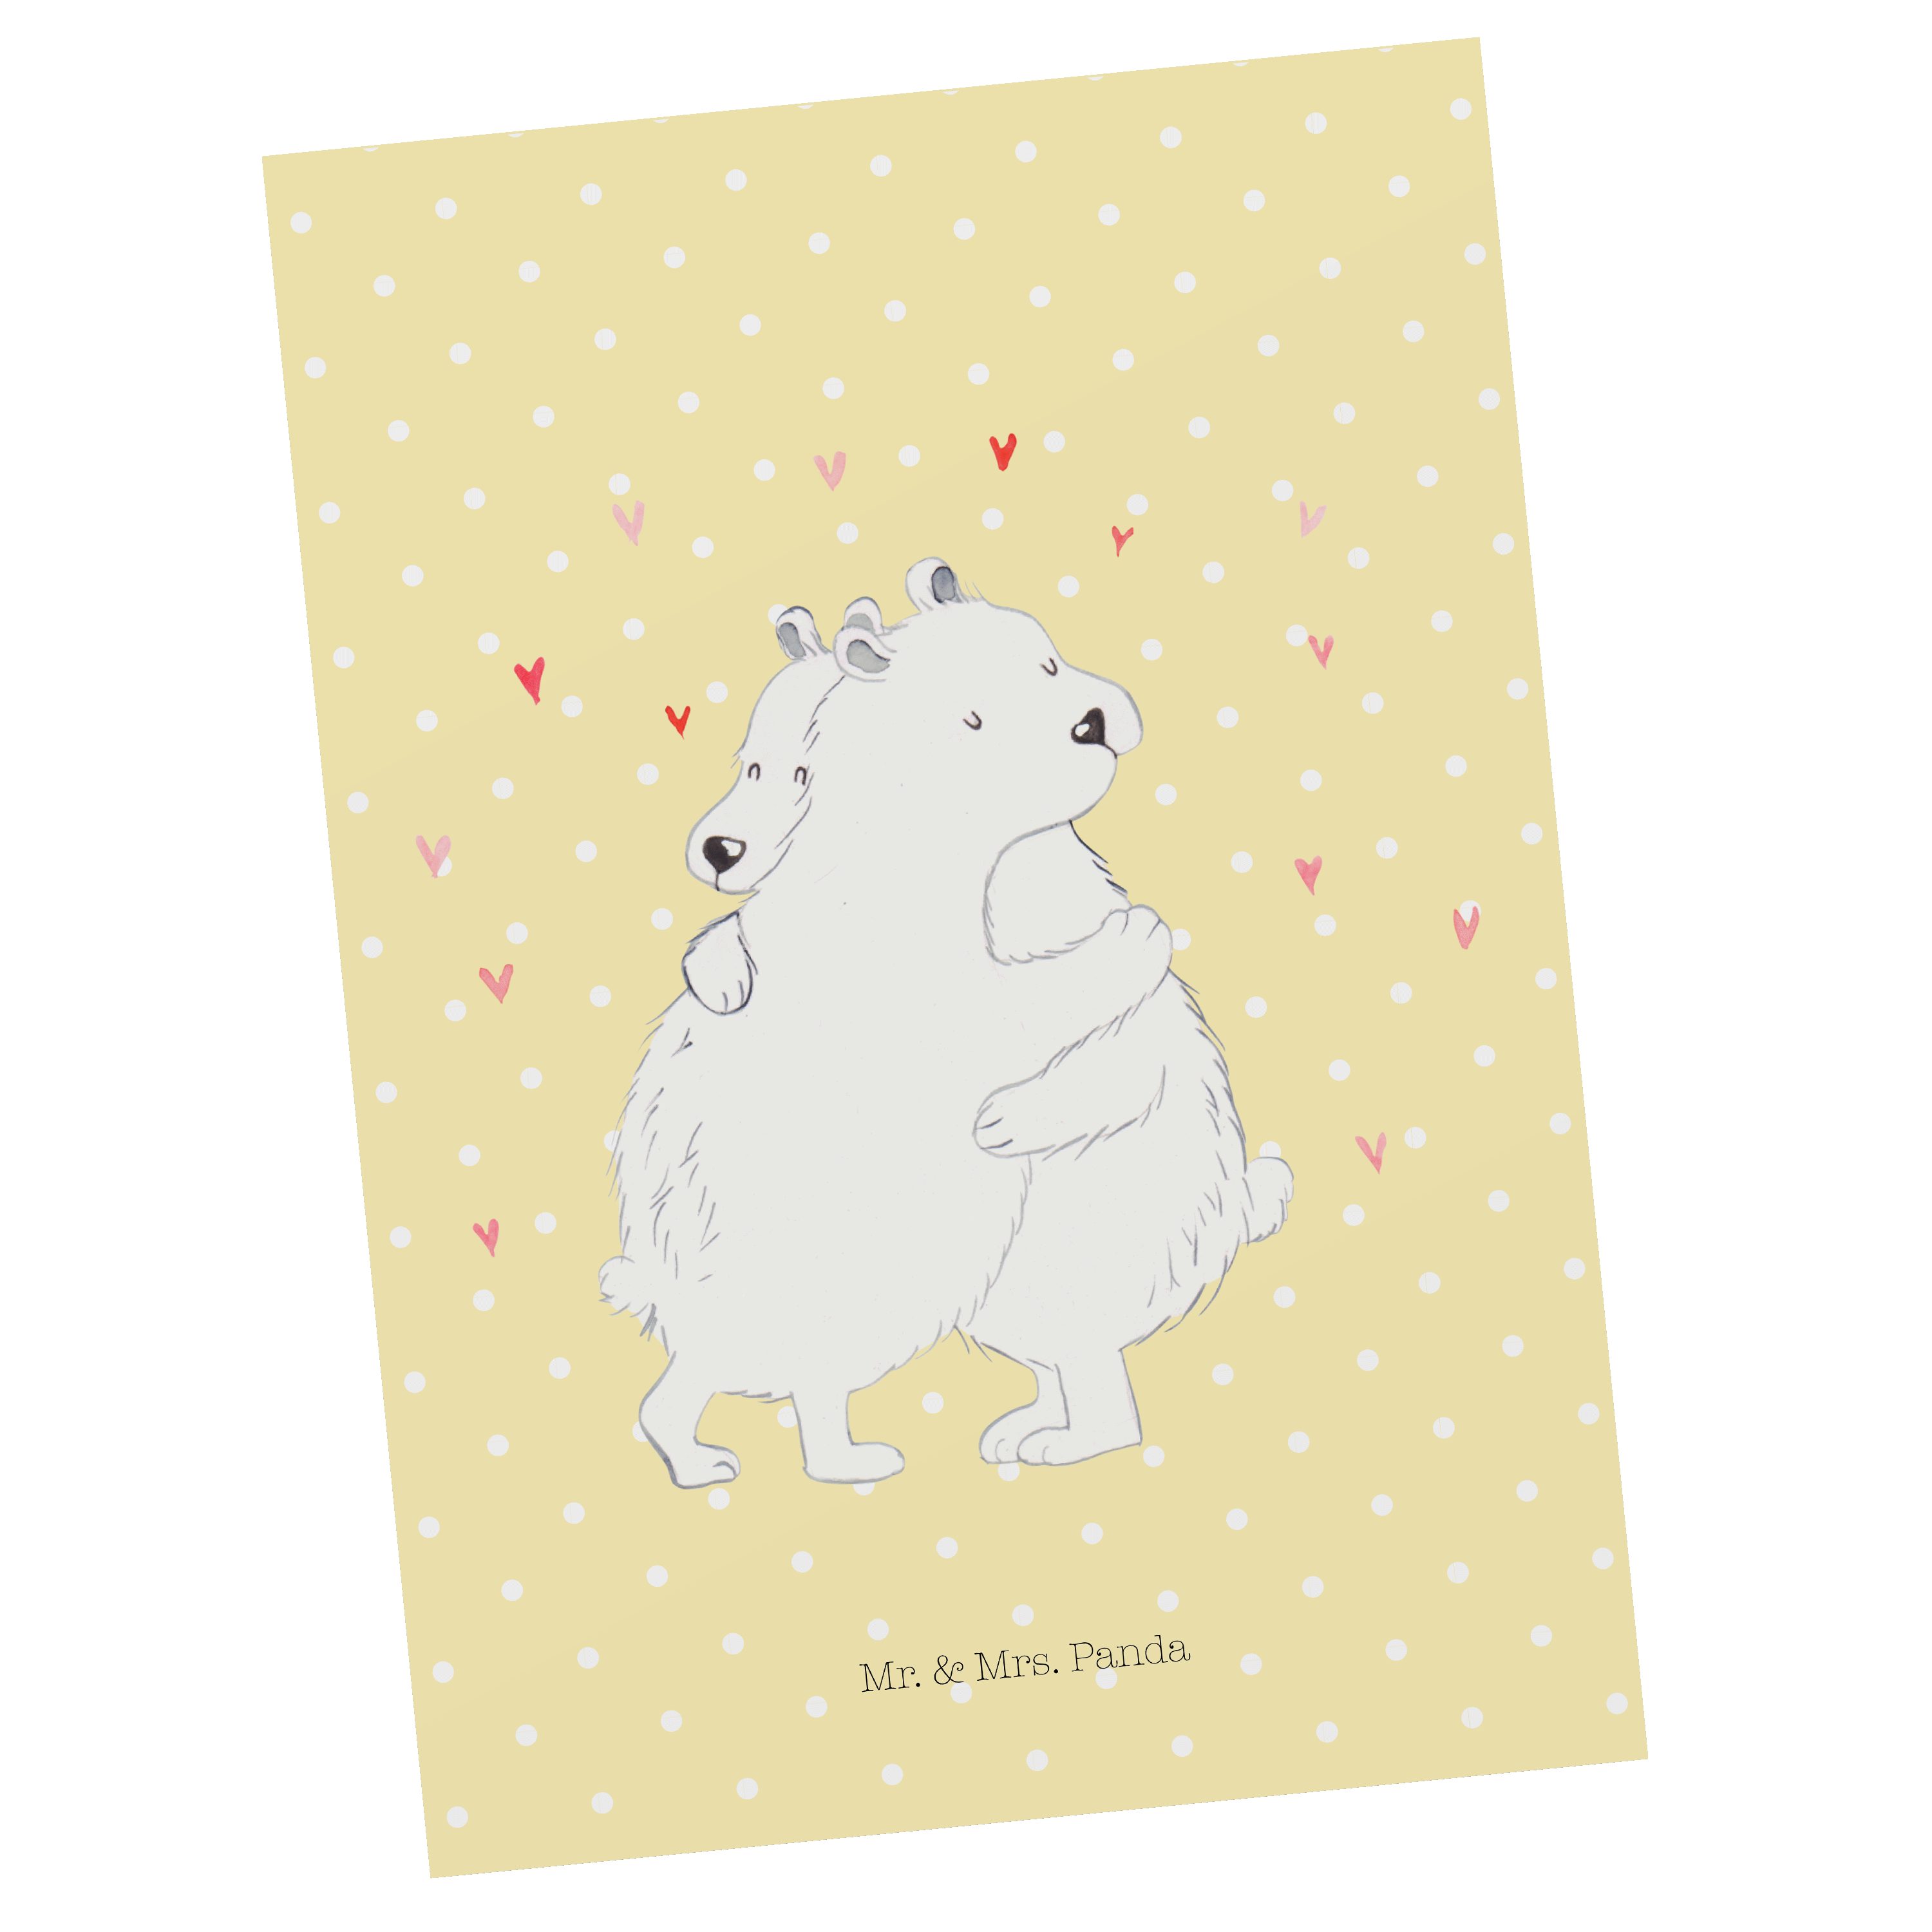 Mr. & Mrs. Panda Postkarte Eisbär Umarmen - Gelb Pastell - Geschenk, Grußkarte, Einladungskarte